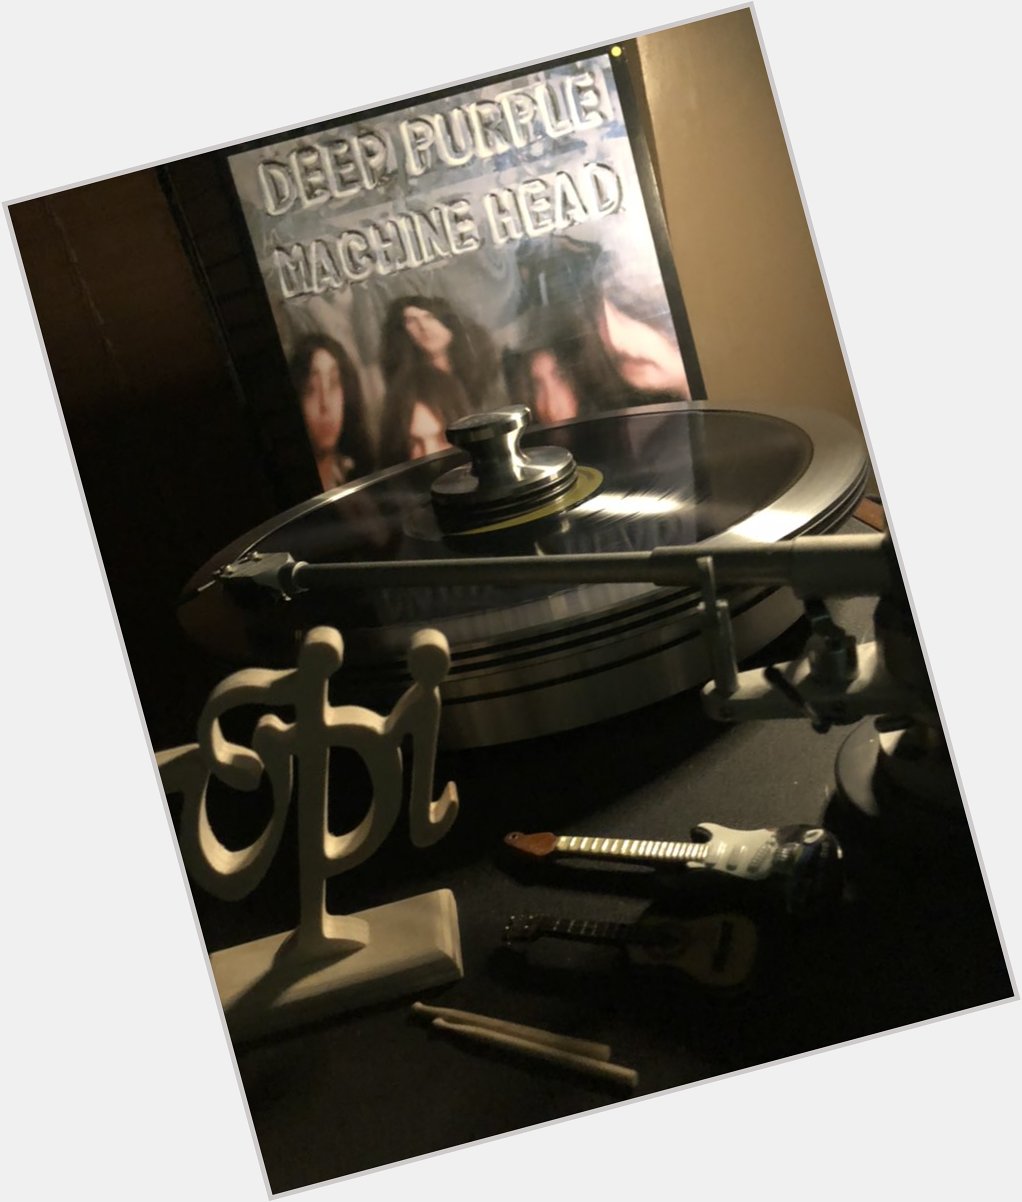 Day late, but Happy 77th Birthday Ian Gillan 

Spinning Deep Purple Machine Head   